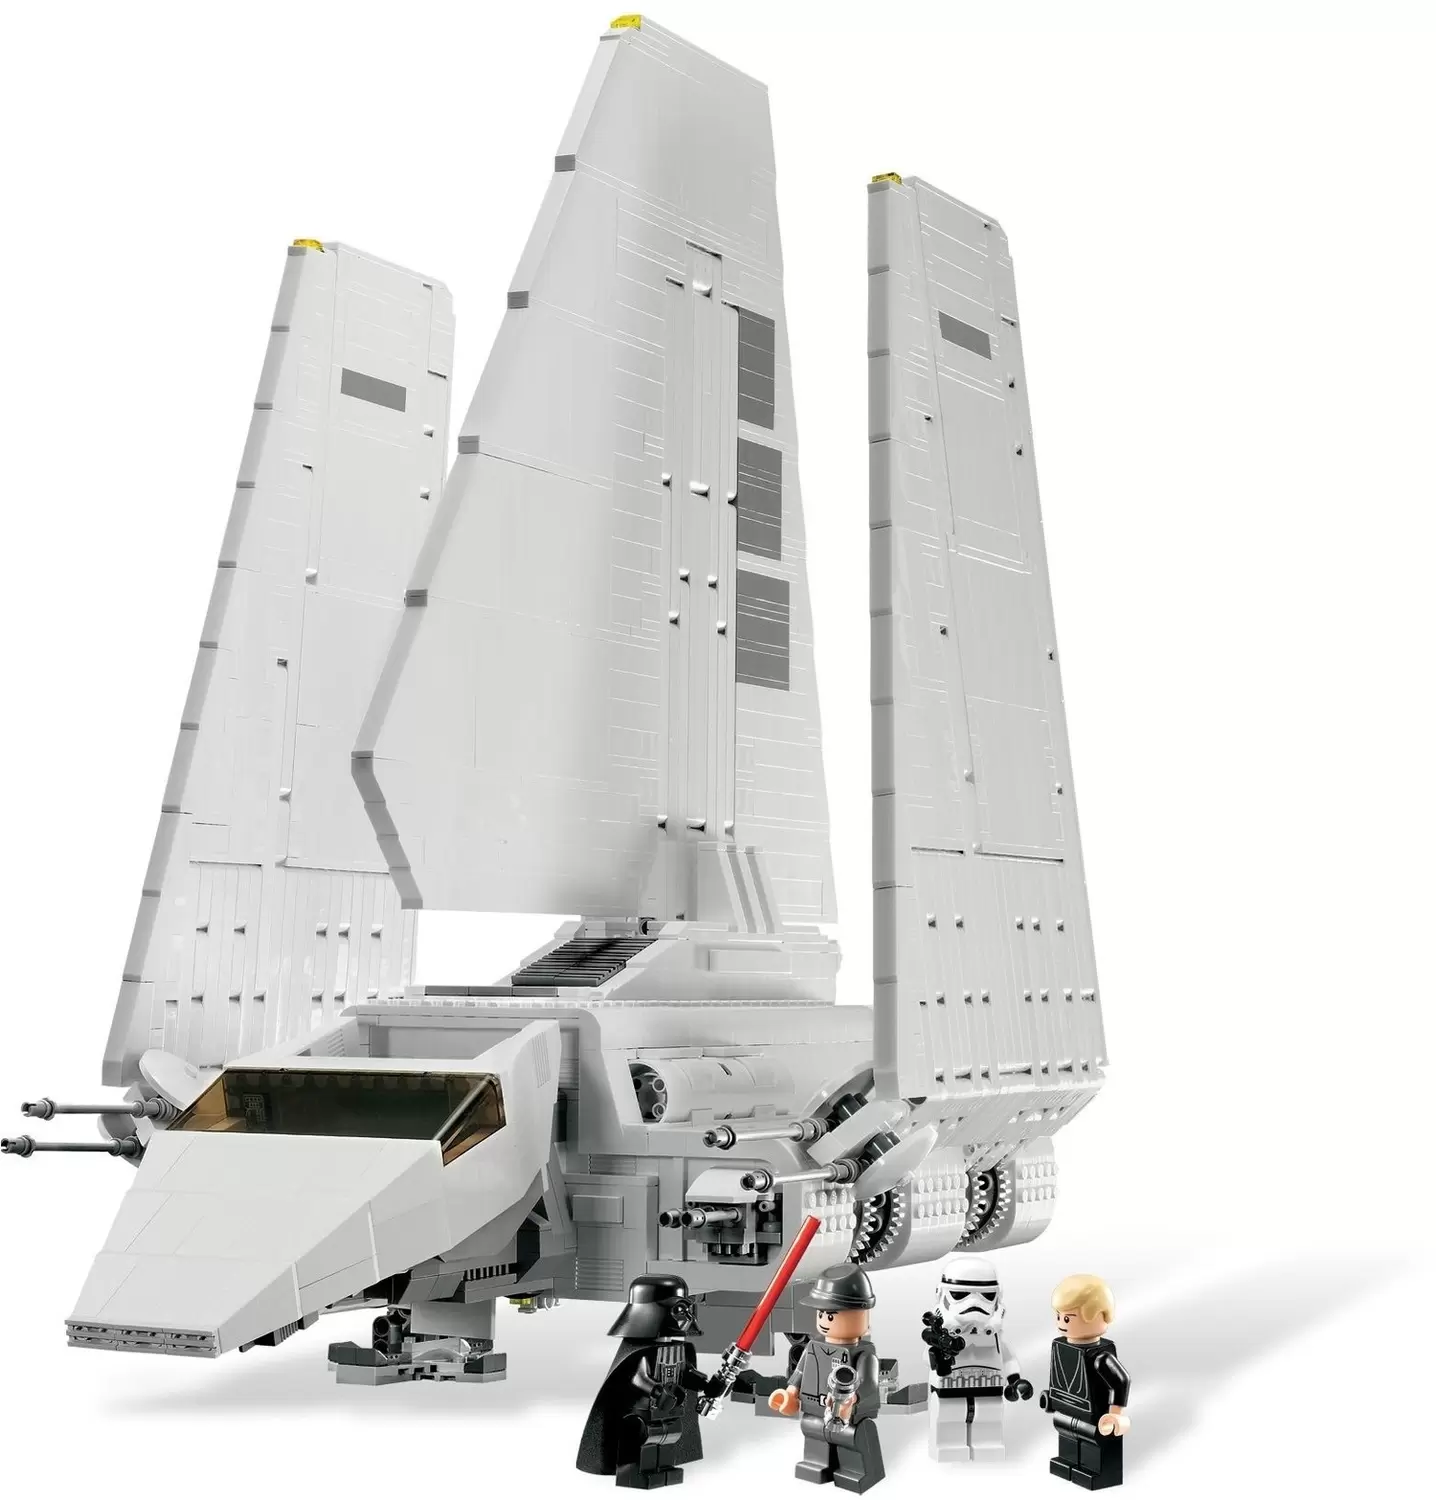 LEGO Star Wars - Imperial Shuttle